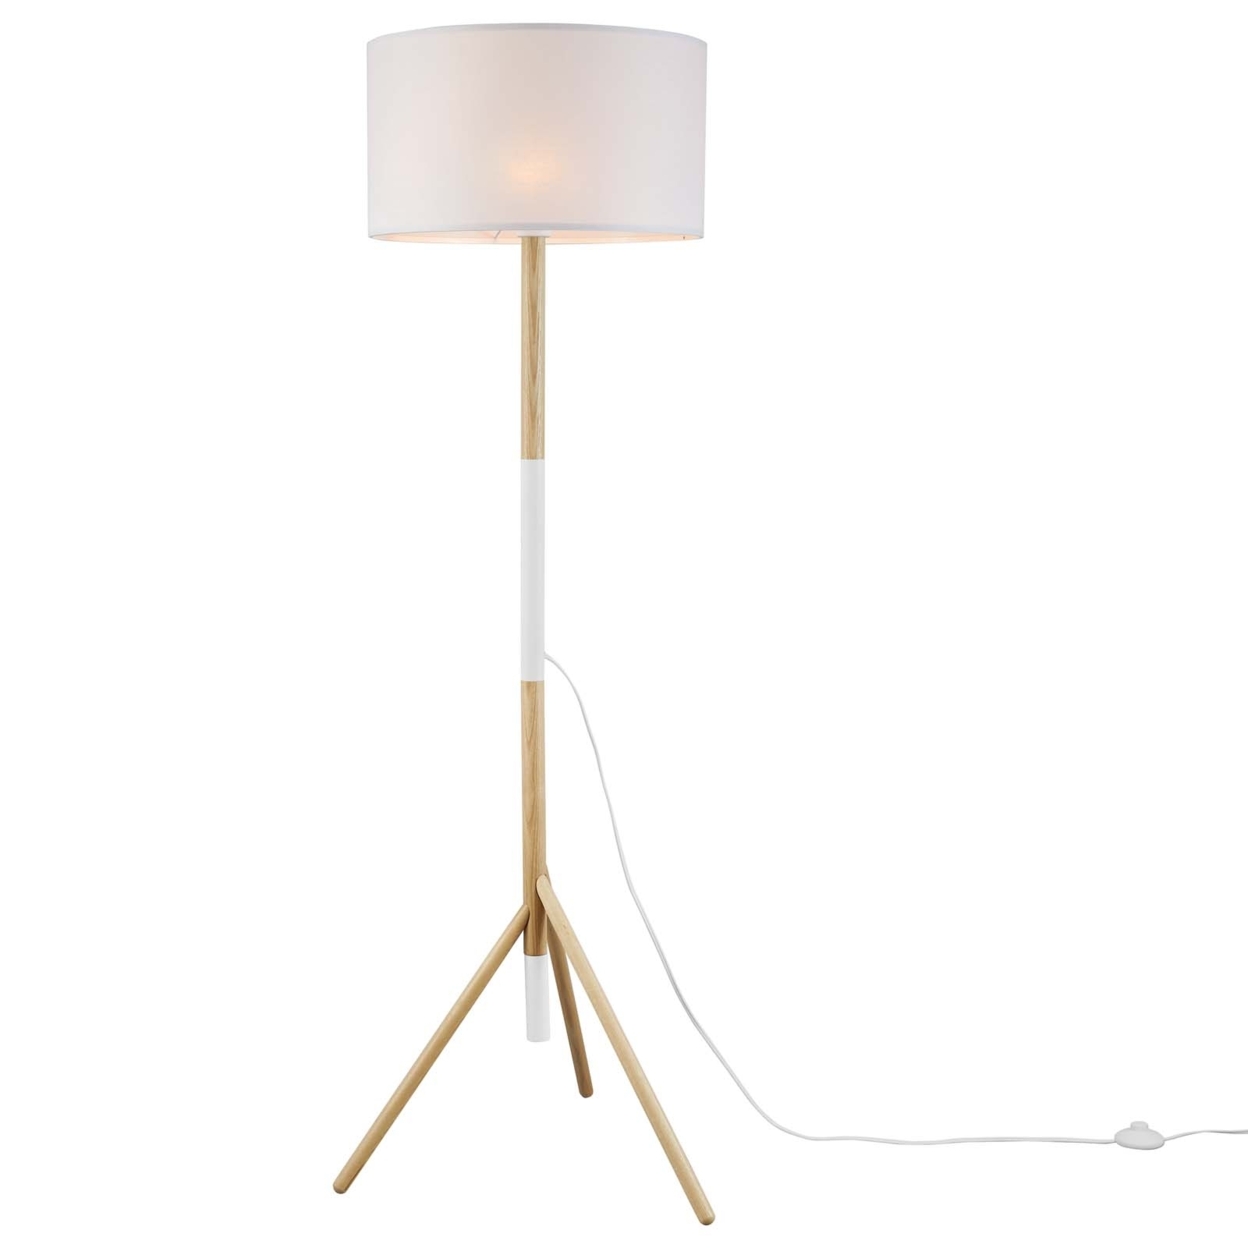 Natalie Tripod Floor Lamp, White Natural